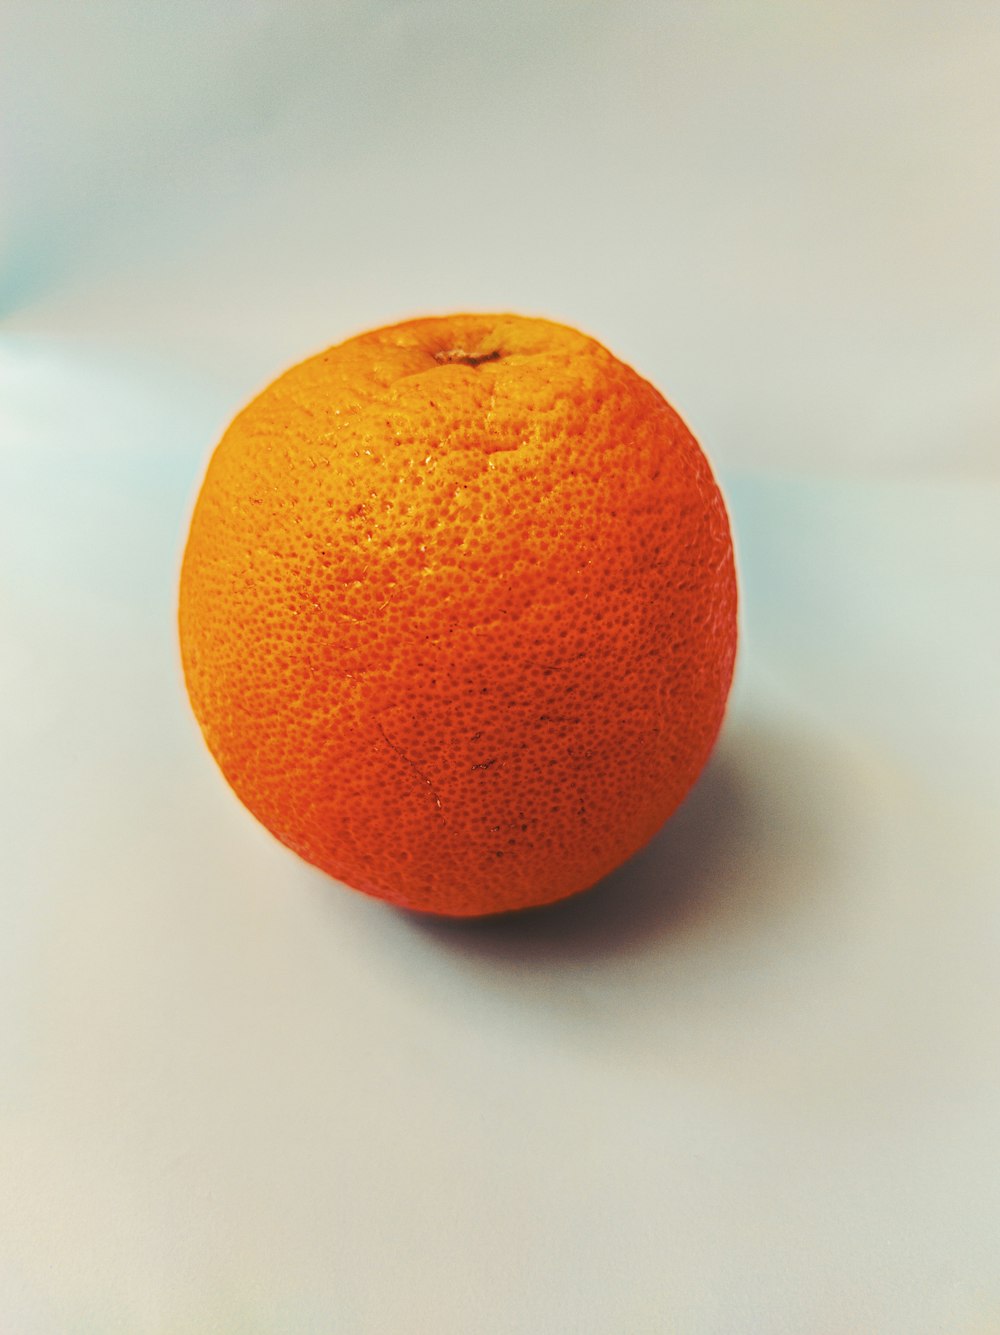 orange fruit on white table